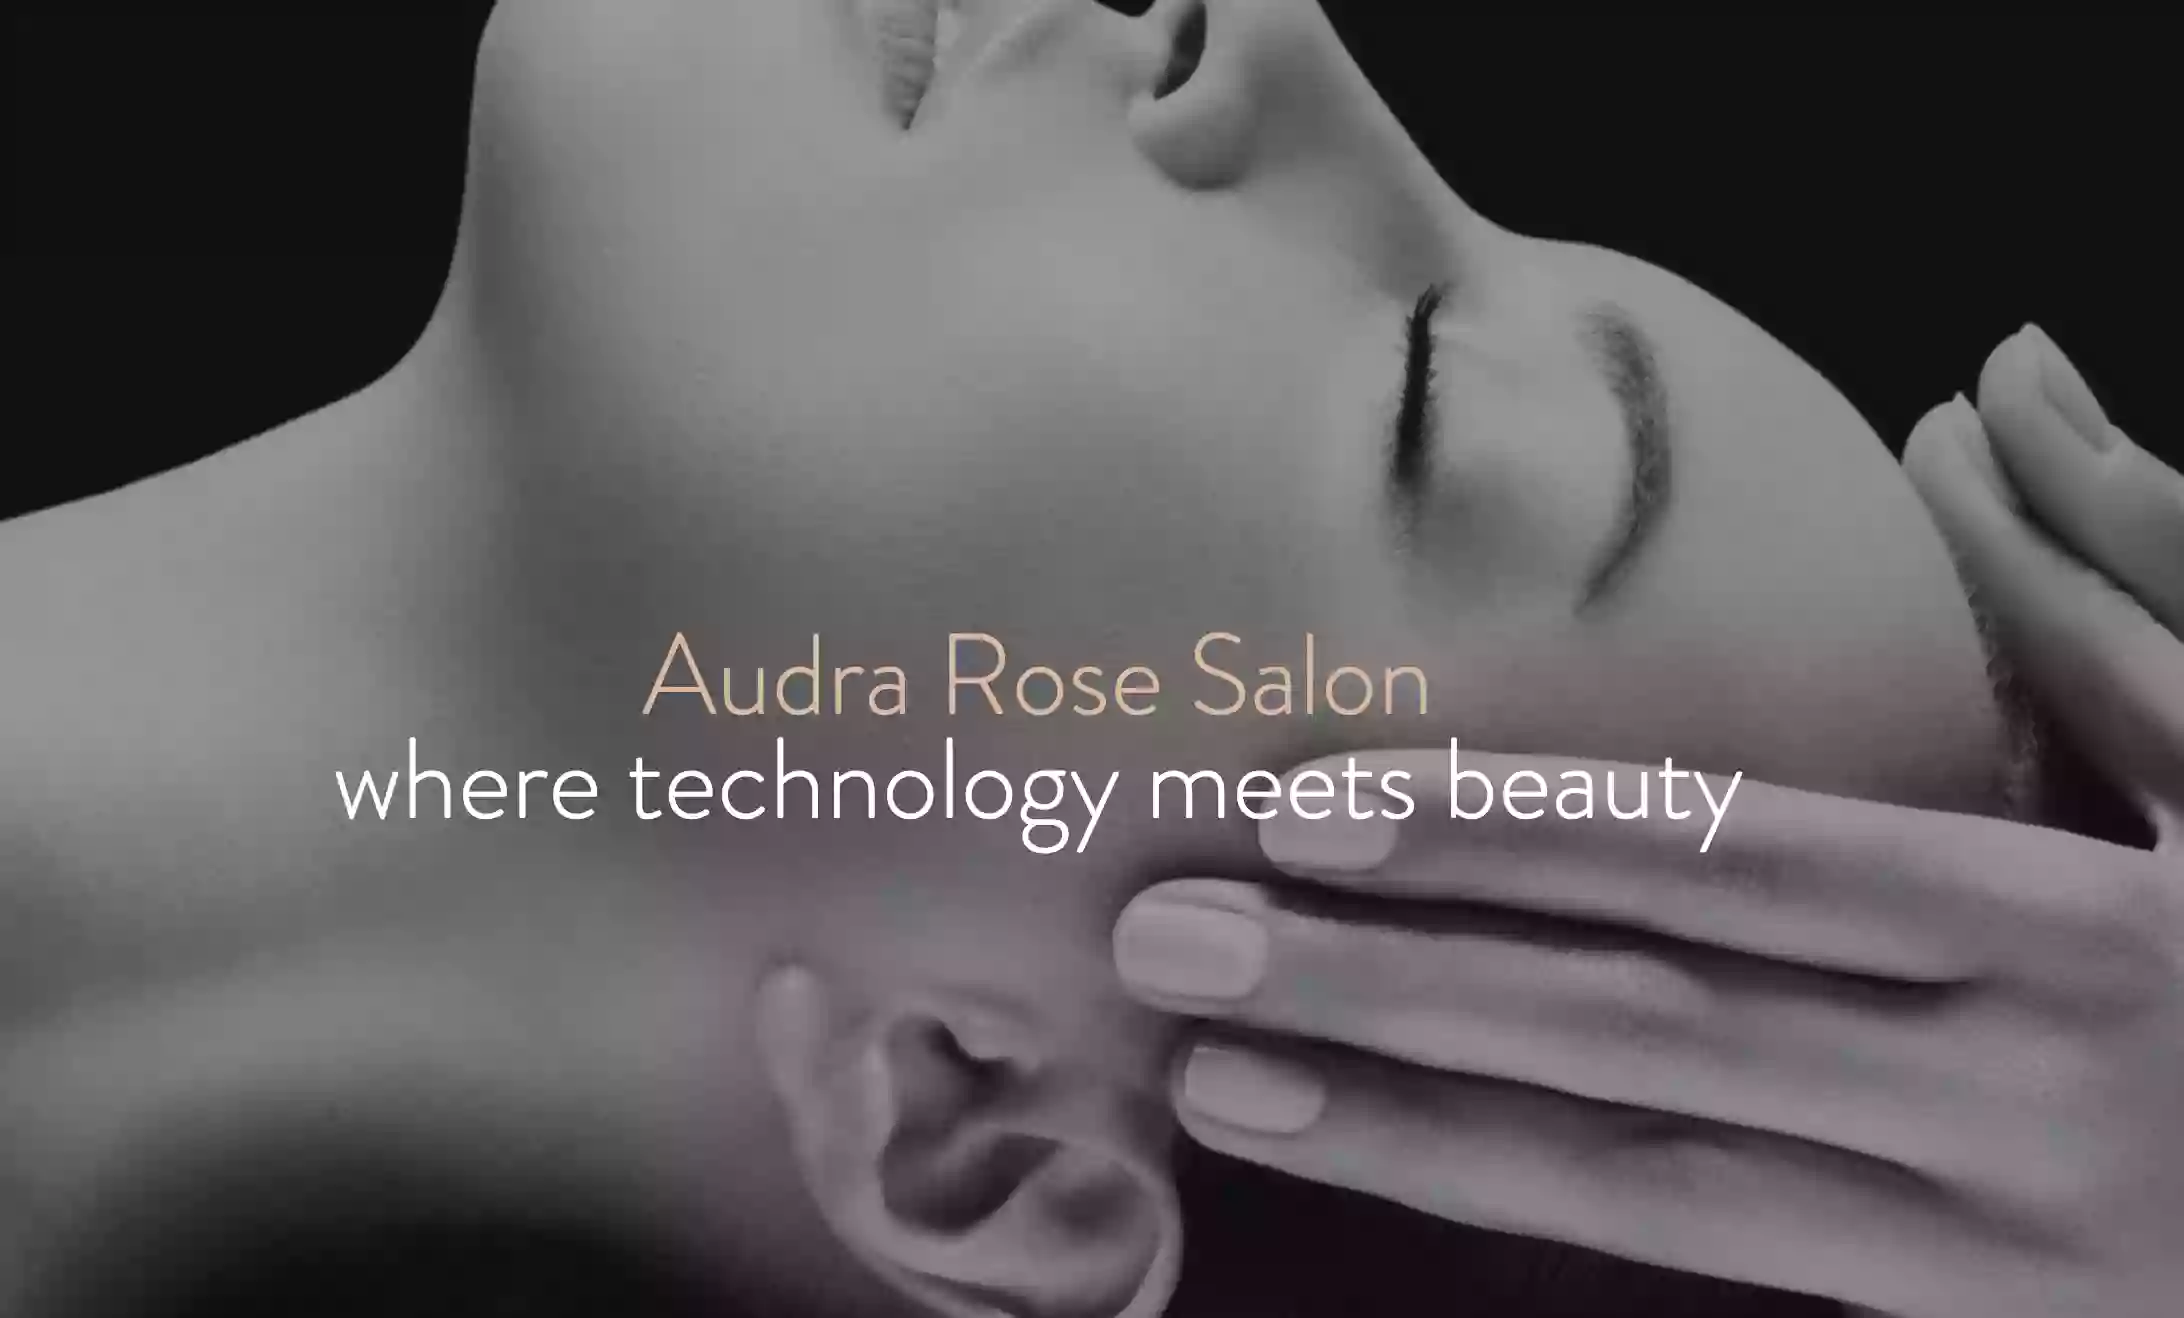 Audra Rose Salon